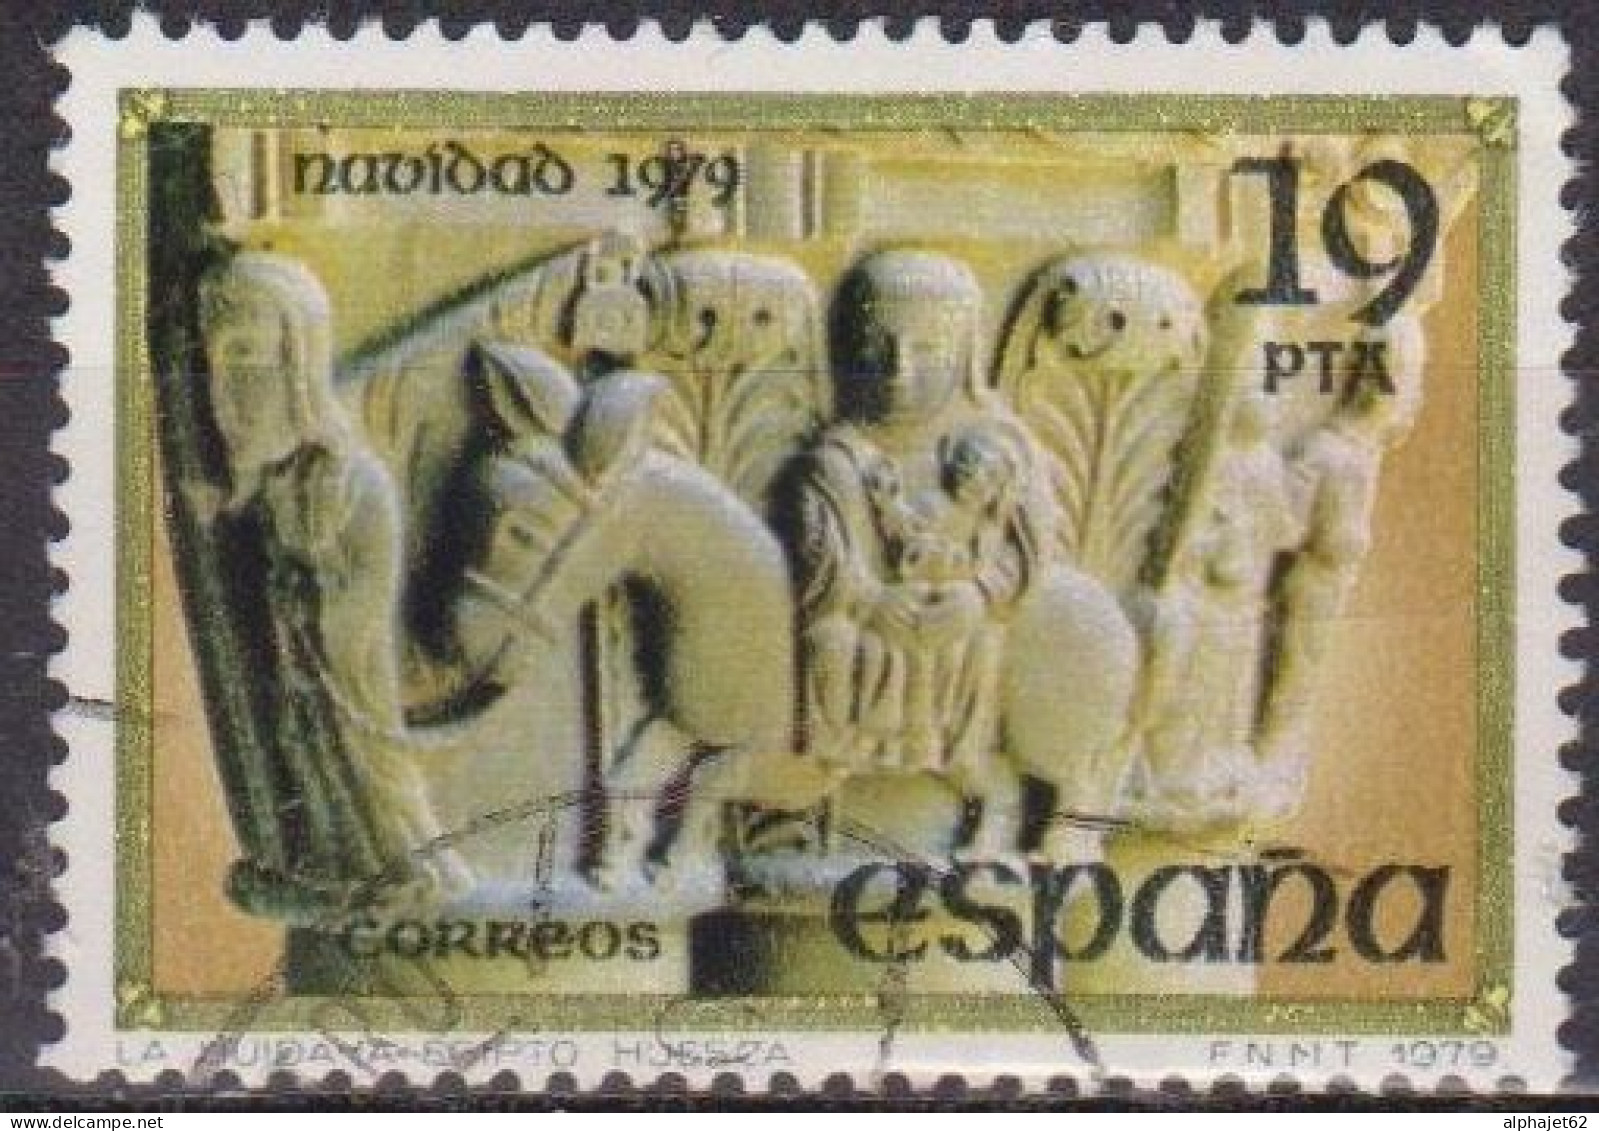 Chapiteaux Romans - ESPAGNE - Eglise San Pedro El Viejo, Huesca - N° 2197 - 1979 - Used Stamps